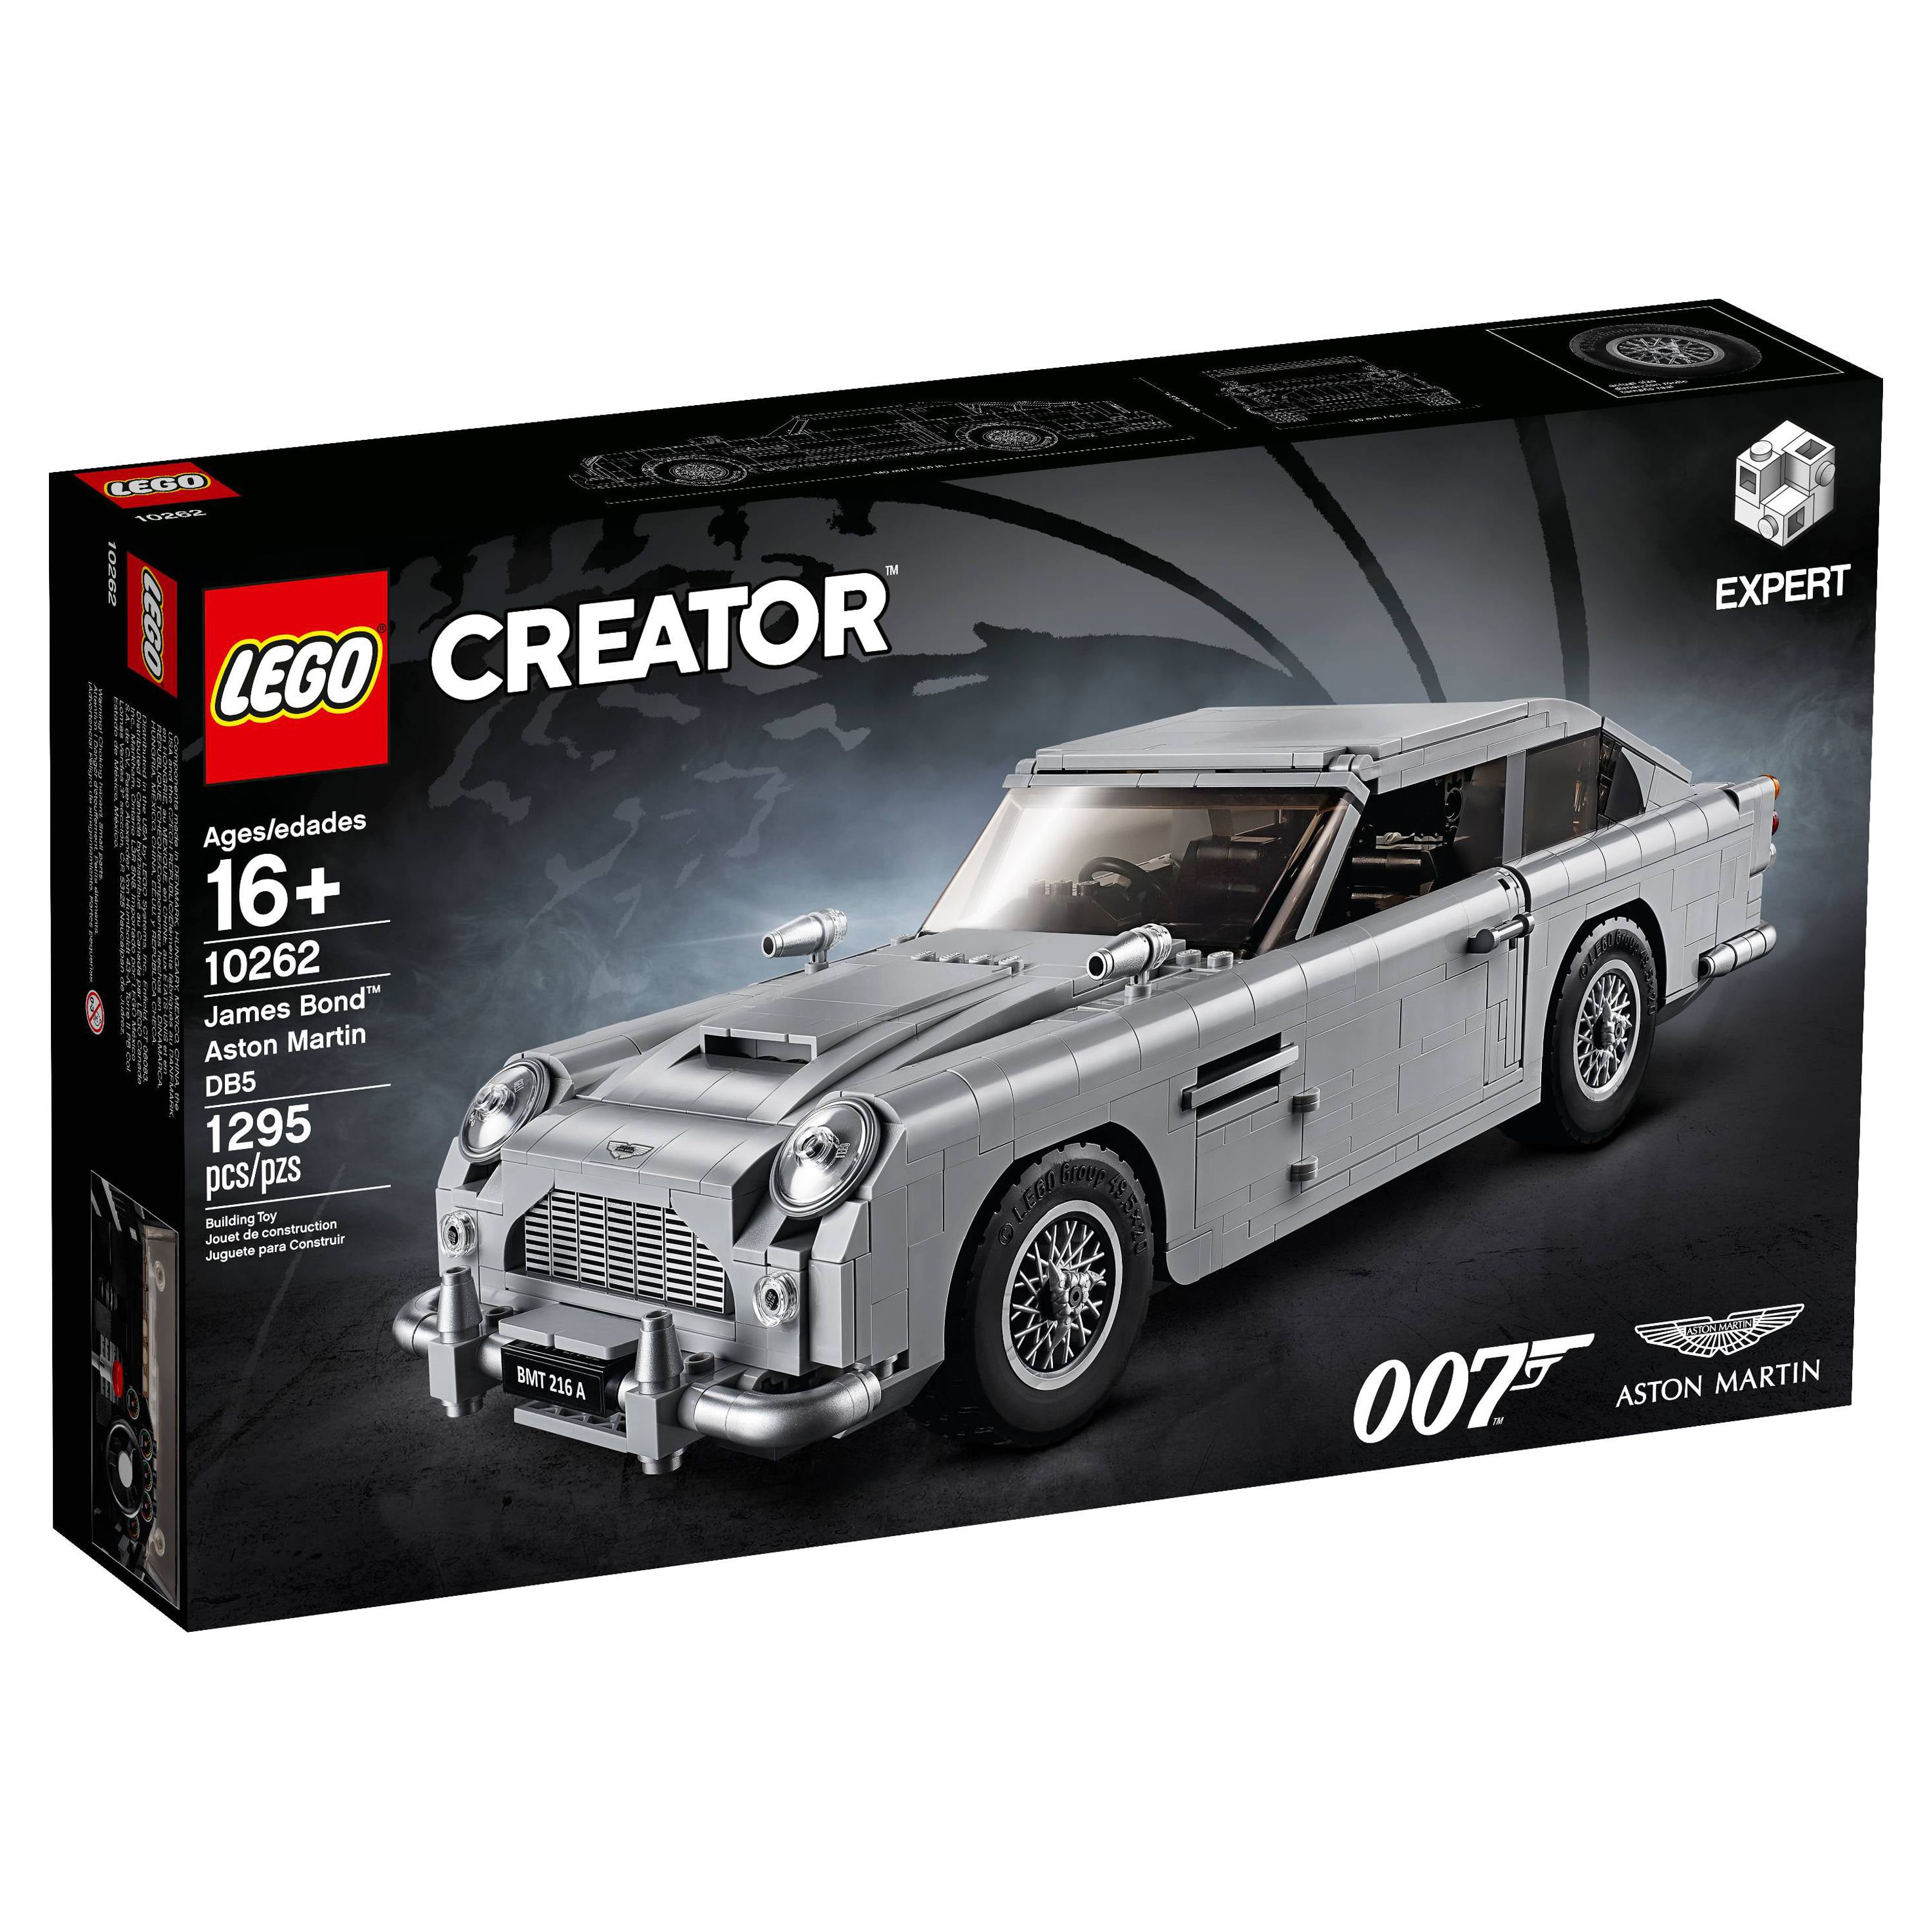 LEGO Creator Expert James Bond Aston Martin DB5 10262 - image 4 of 7